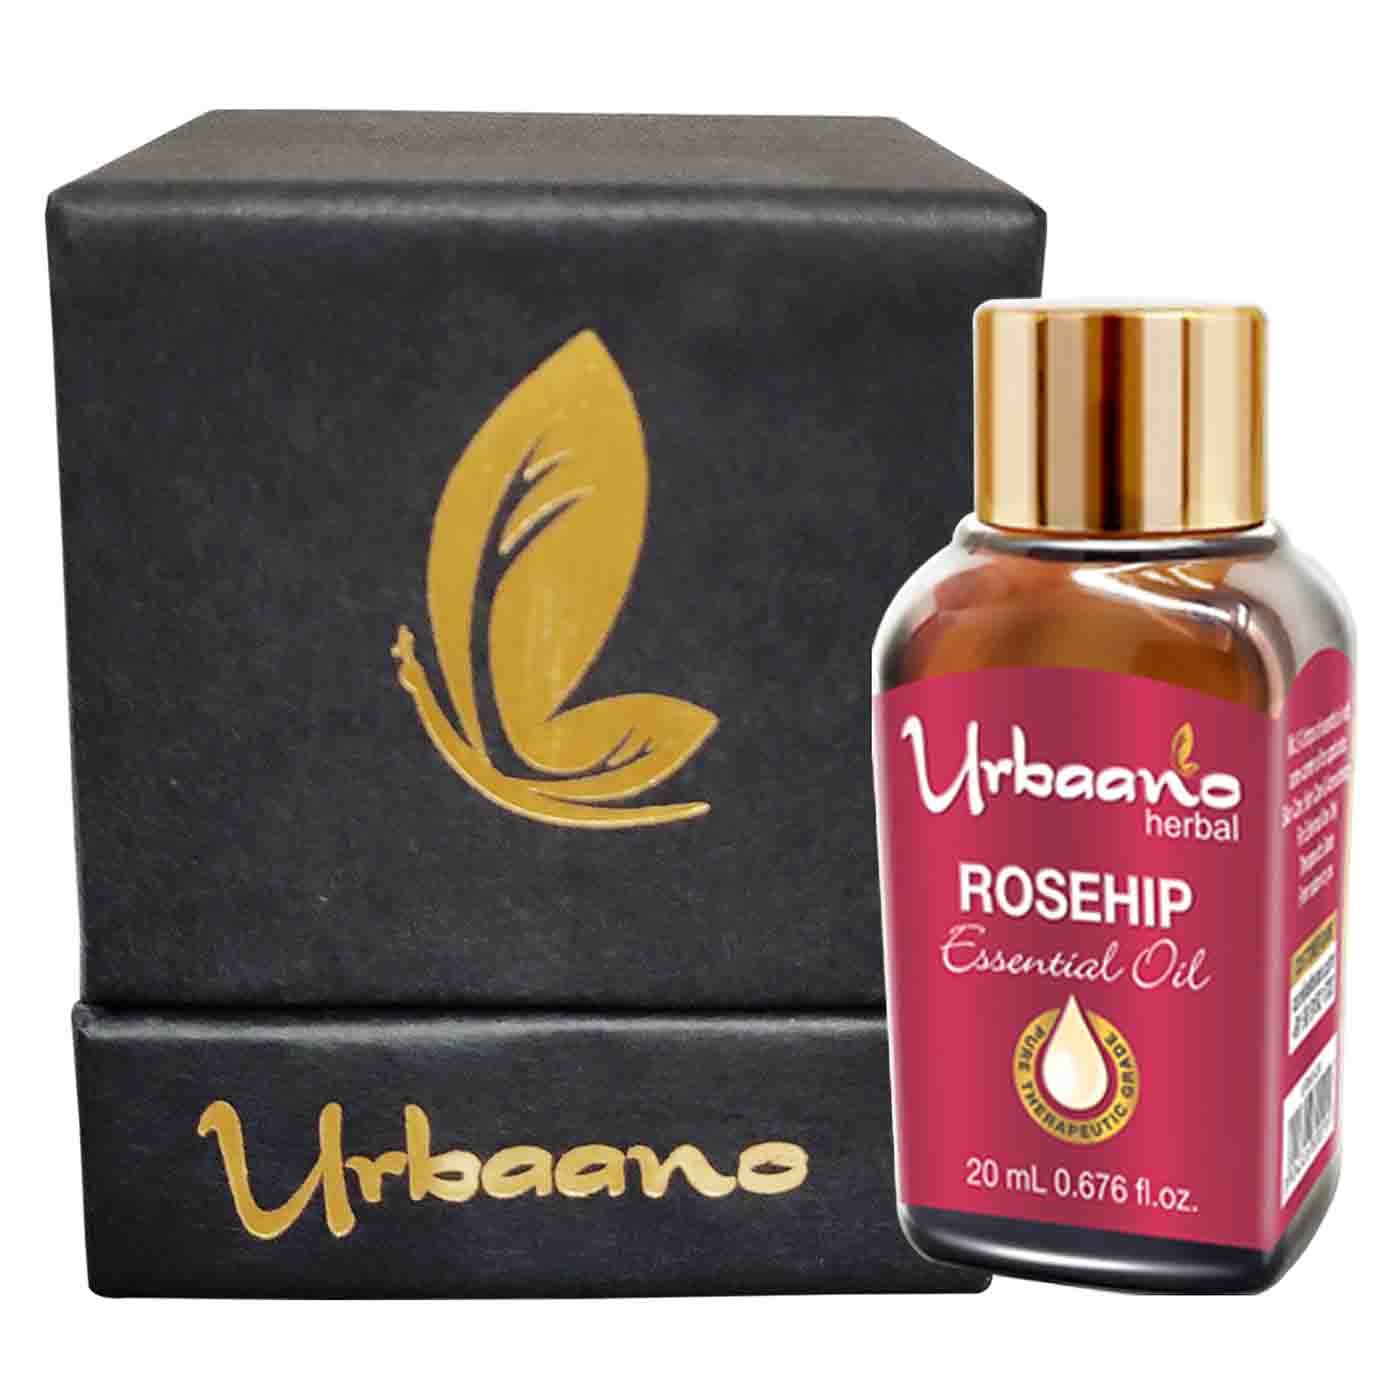 urbaano herbal rosehip essential oil, carrier oil, for skincare in gift box